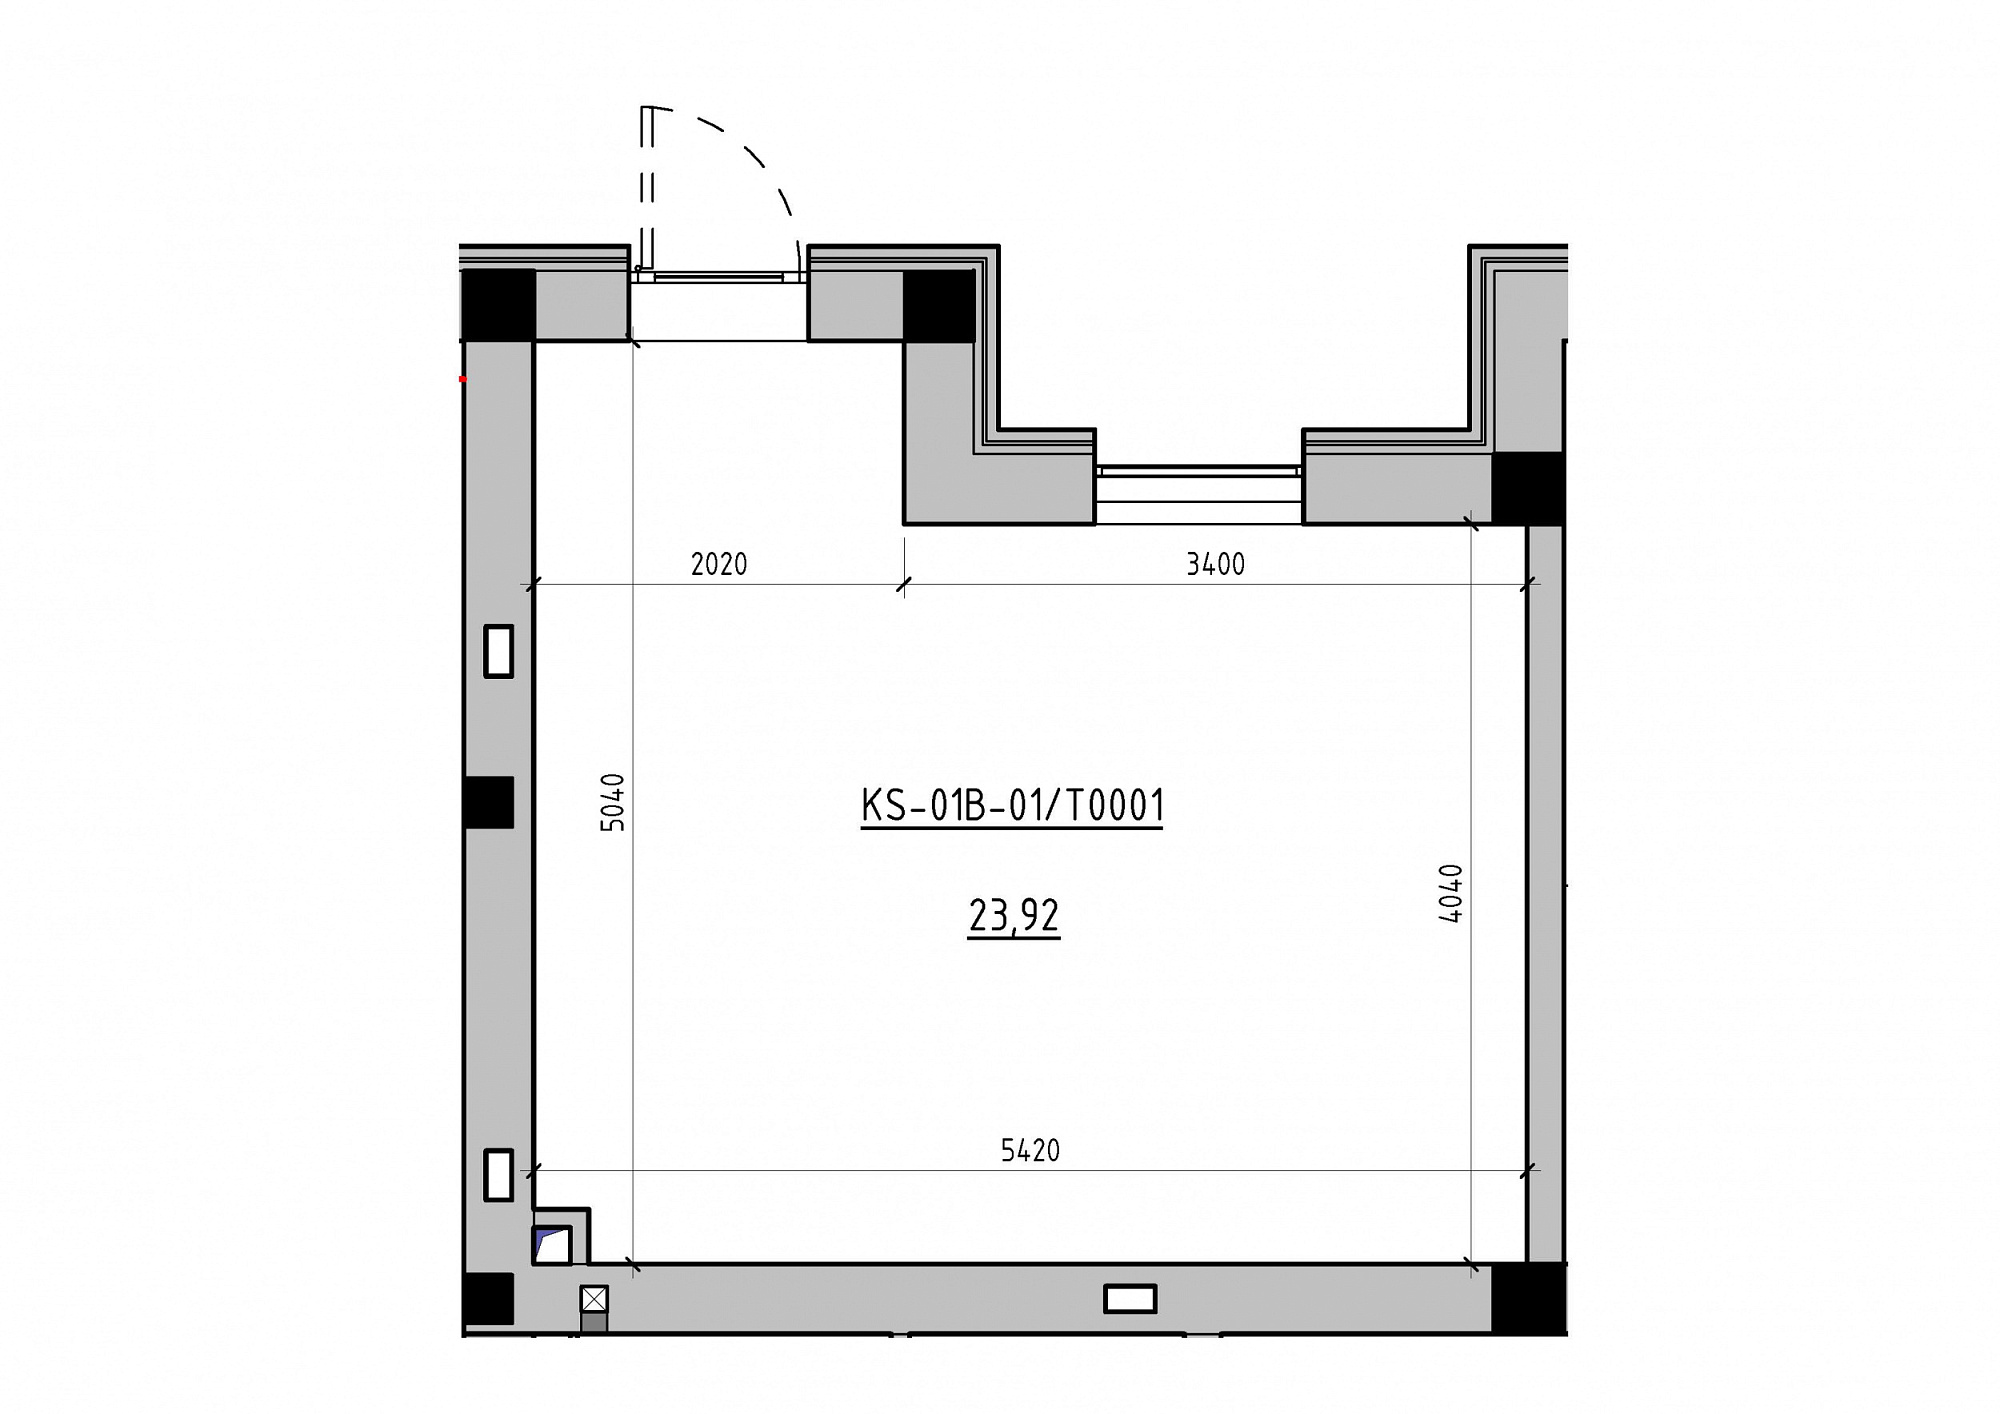 Planning Commercial premises area 23.92m2, KS-01B-01/Т001.